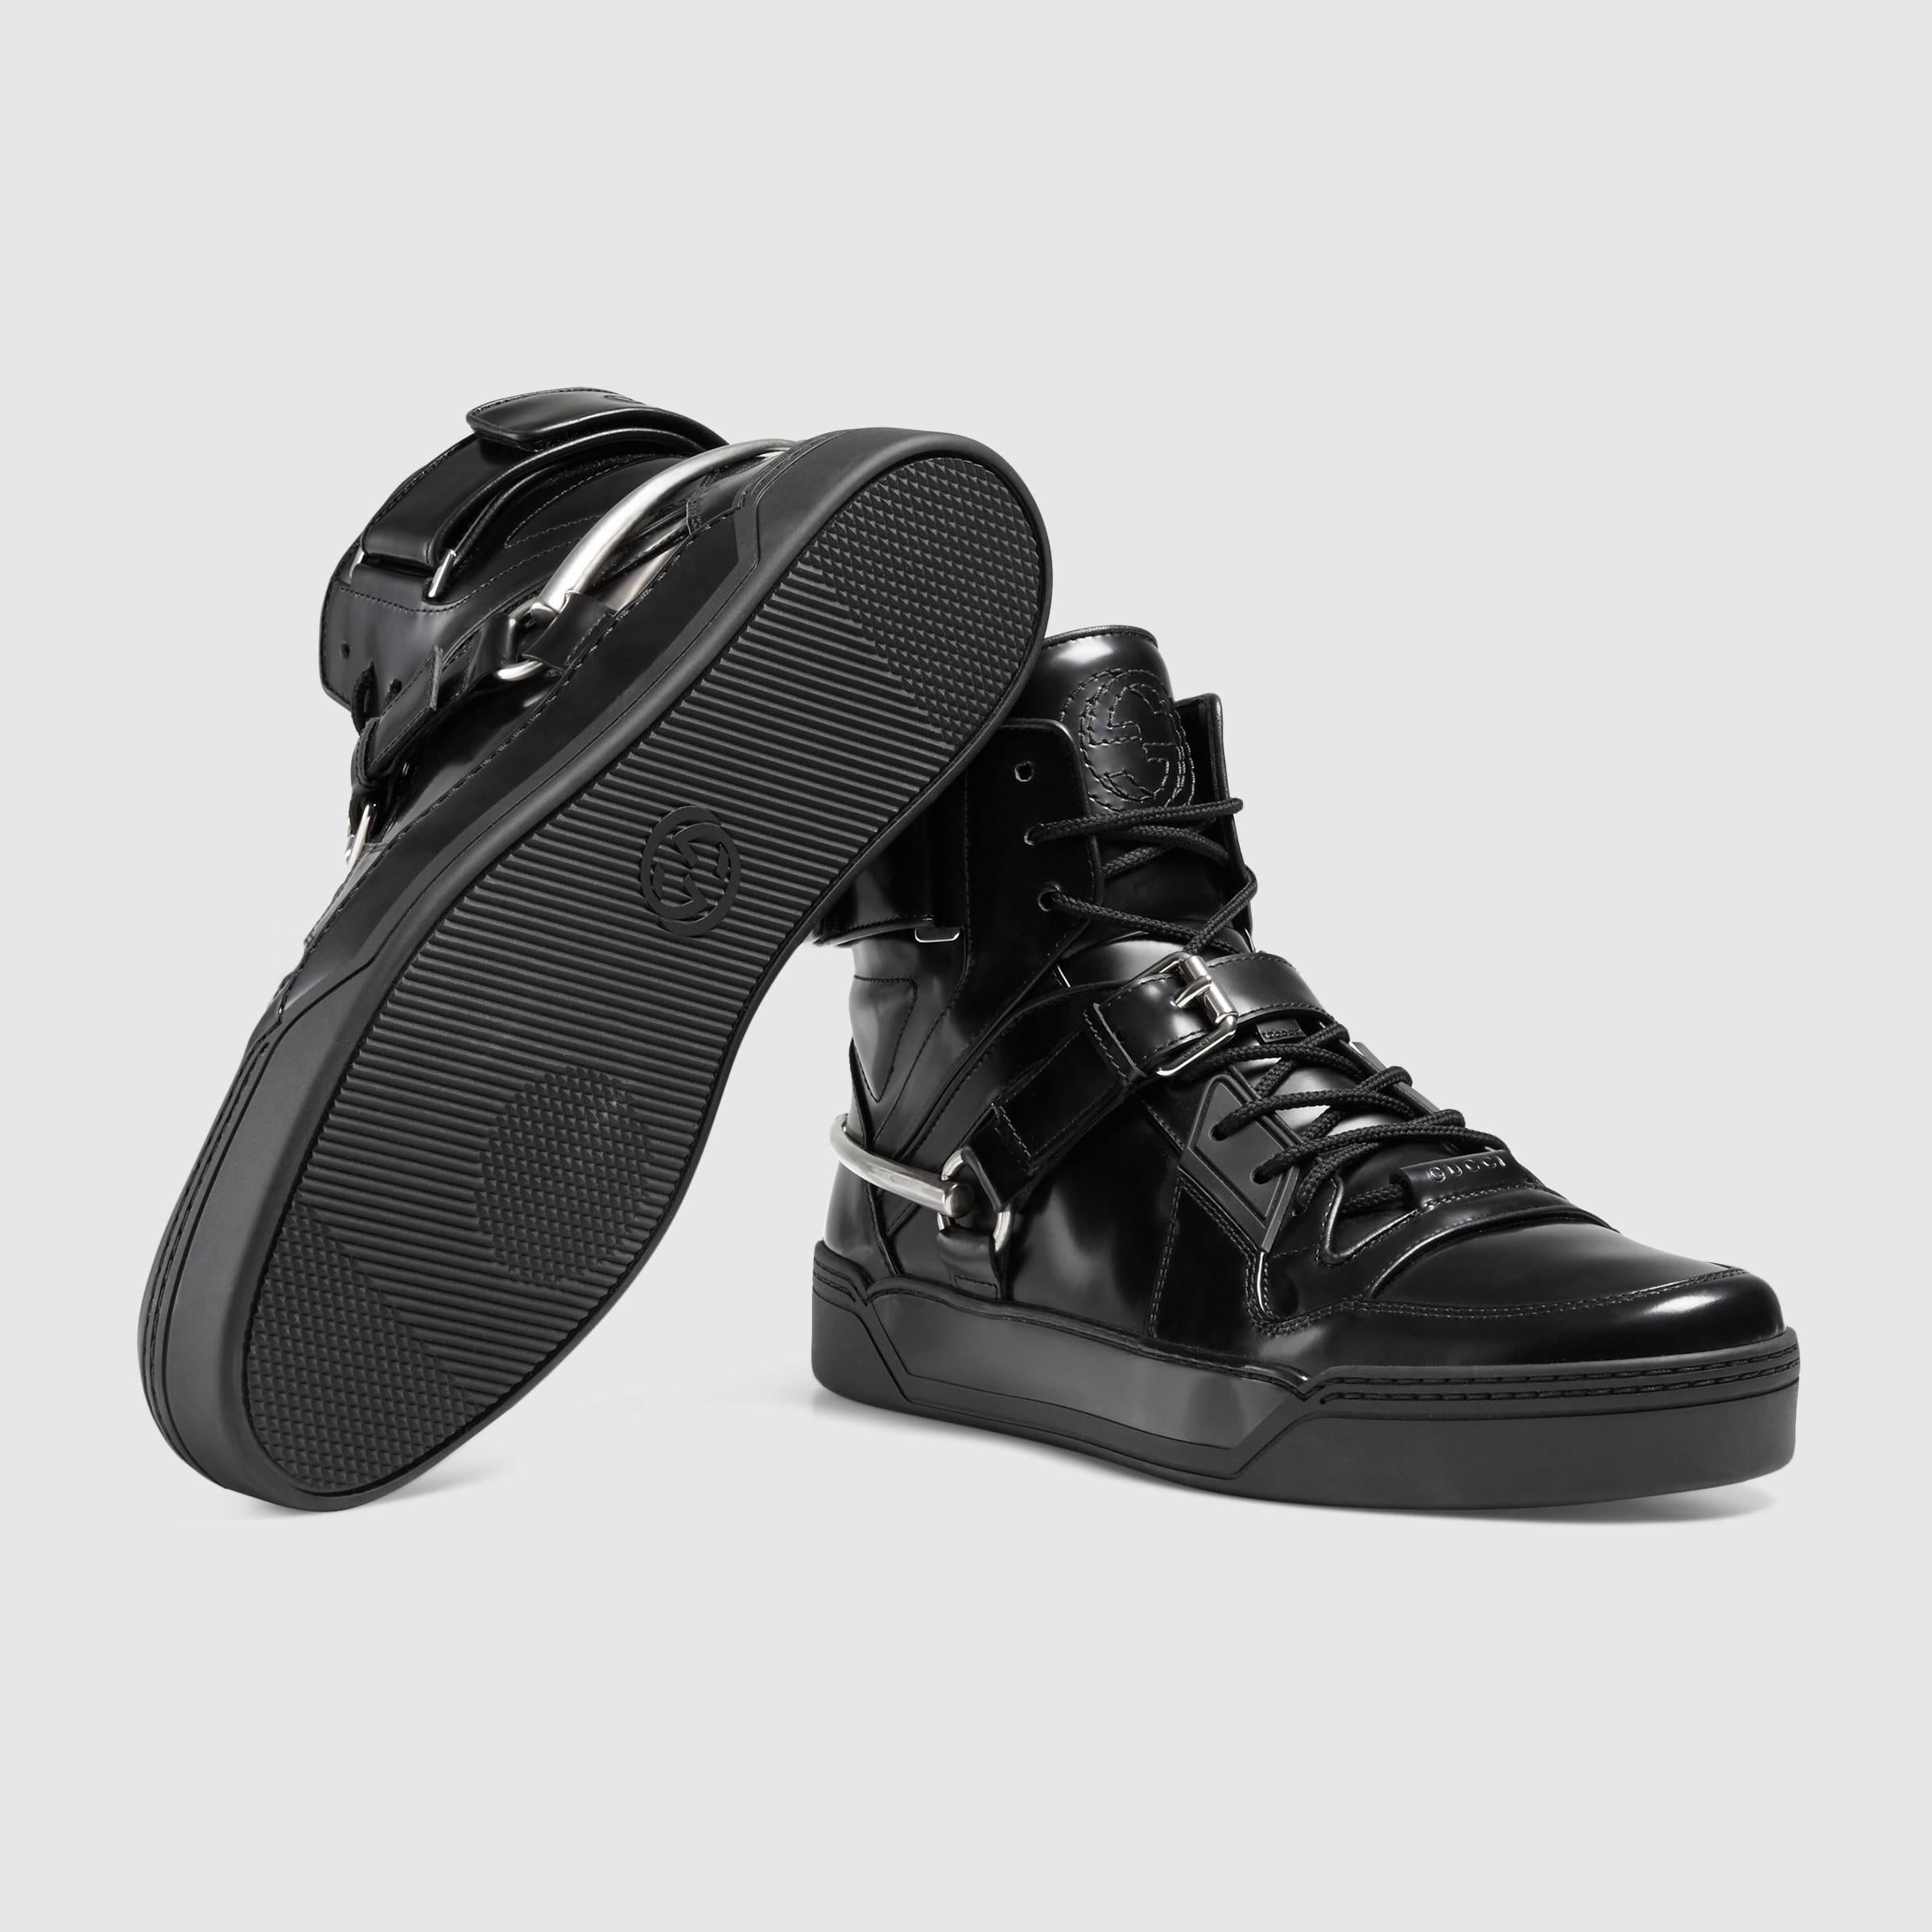 New Gucci Men's Black *Basket Darko* High-Top Sneaker Gucci sizes 8.5  9  9.5 5